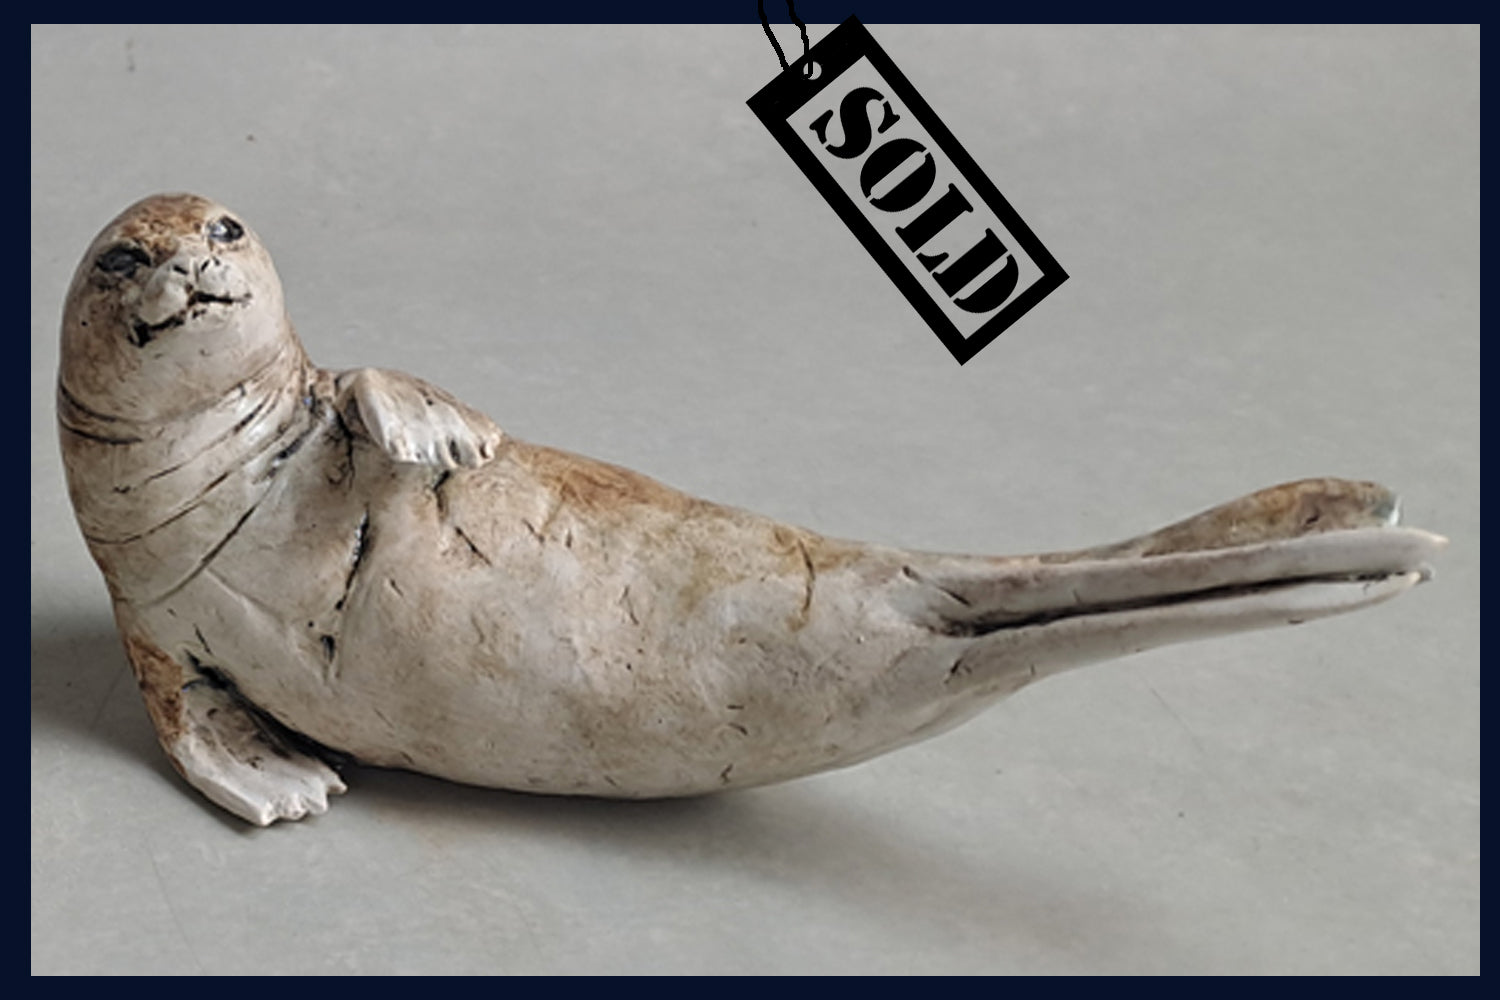 SOLD - Seal 2: Ceramic Sculpture by David Cooke